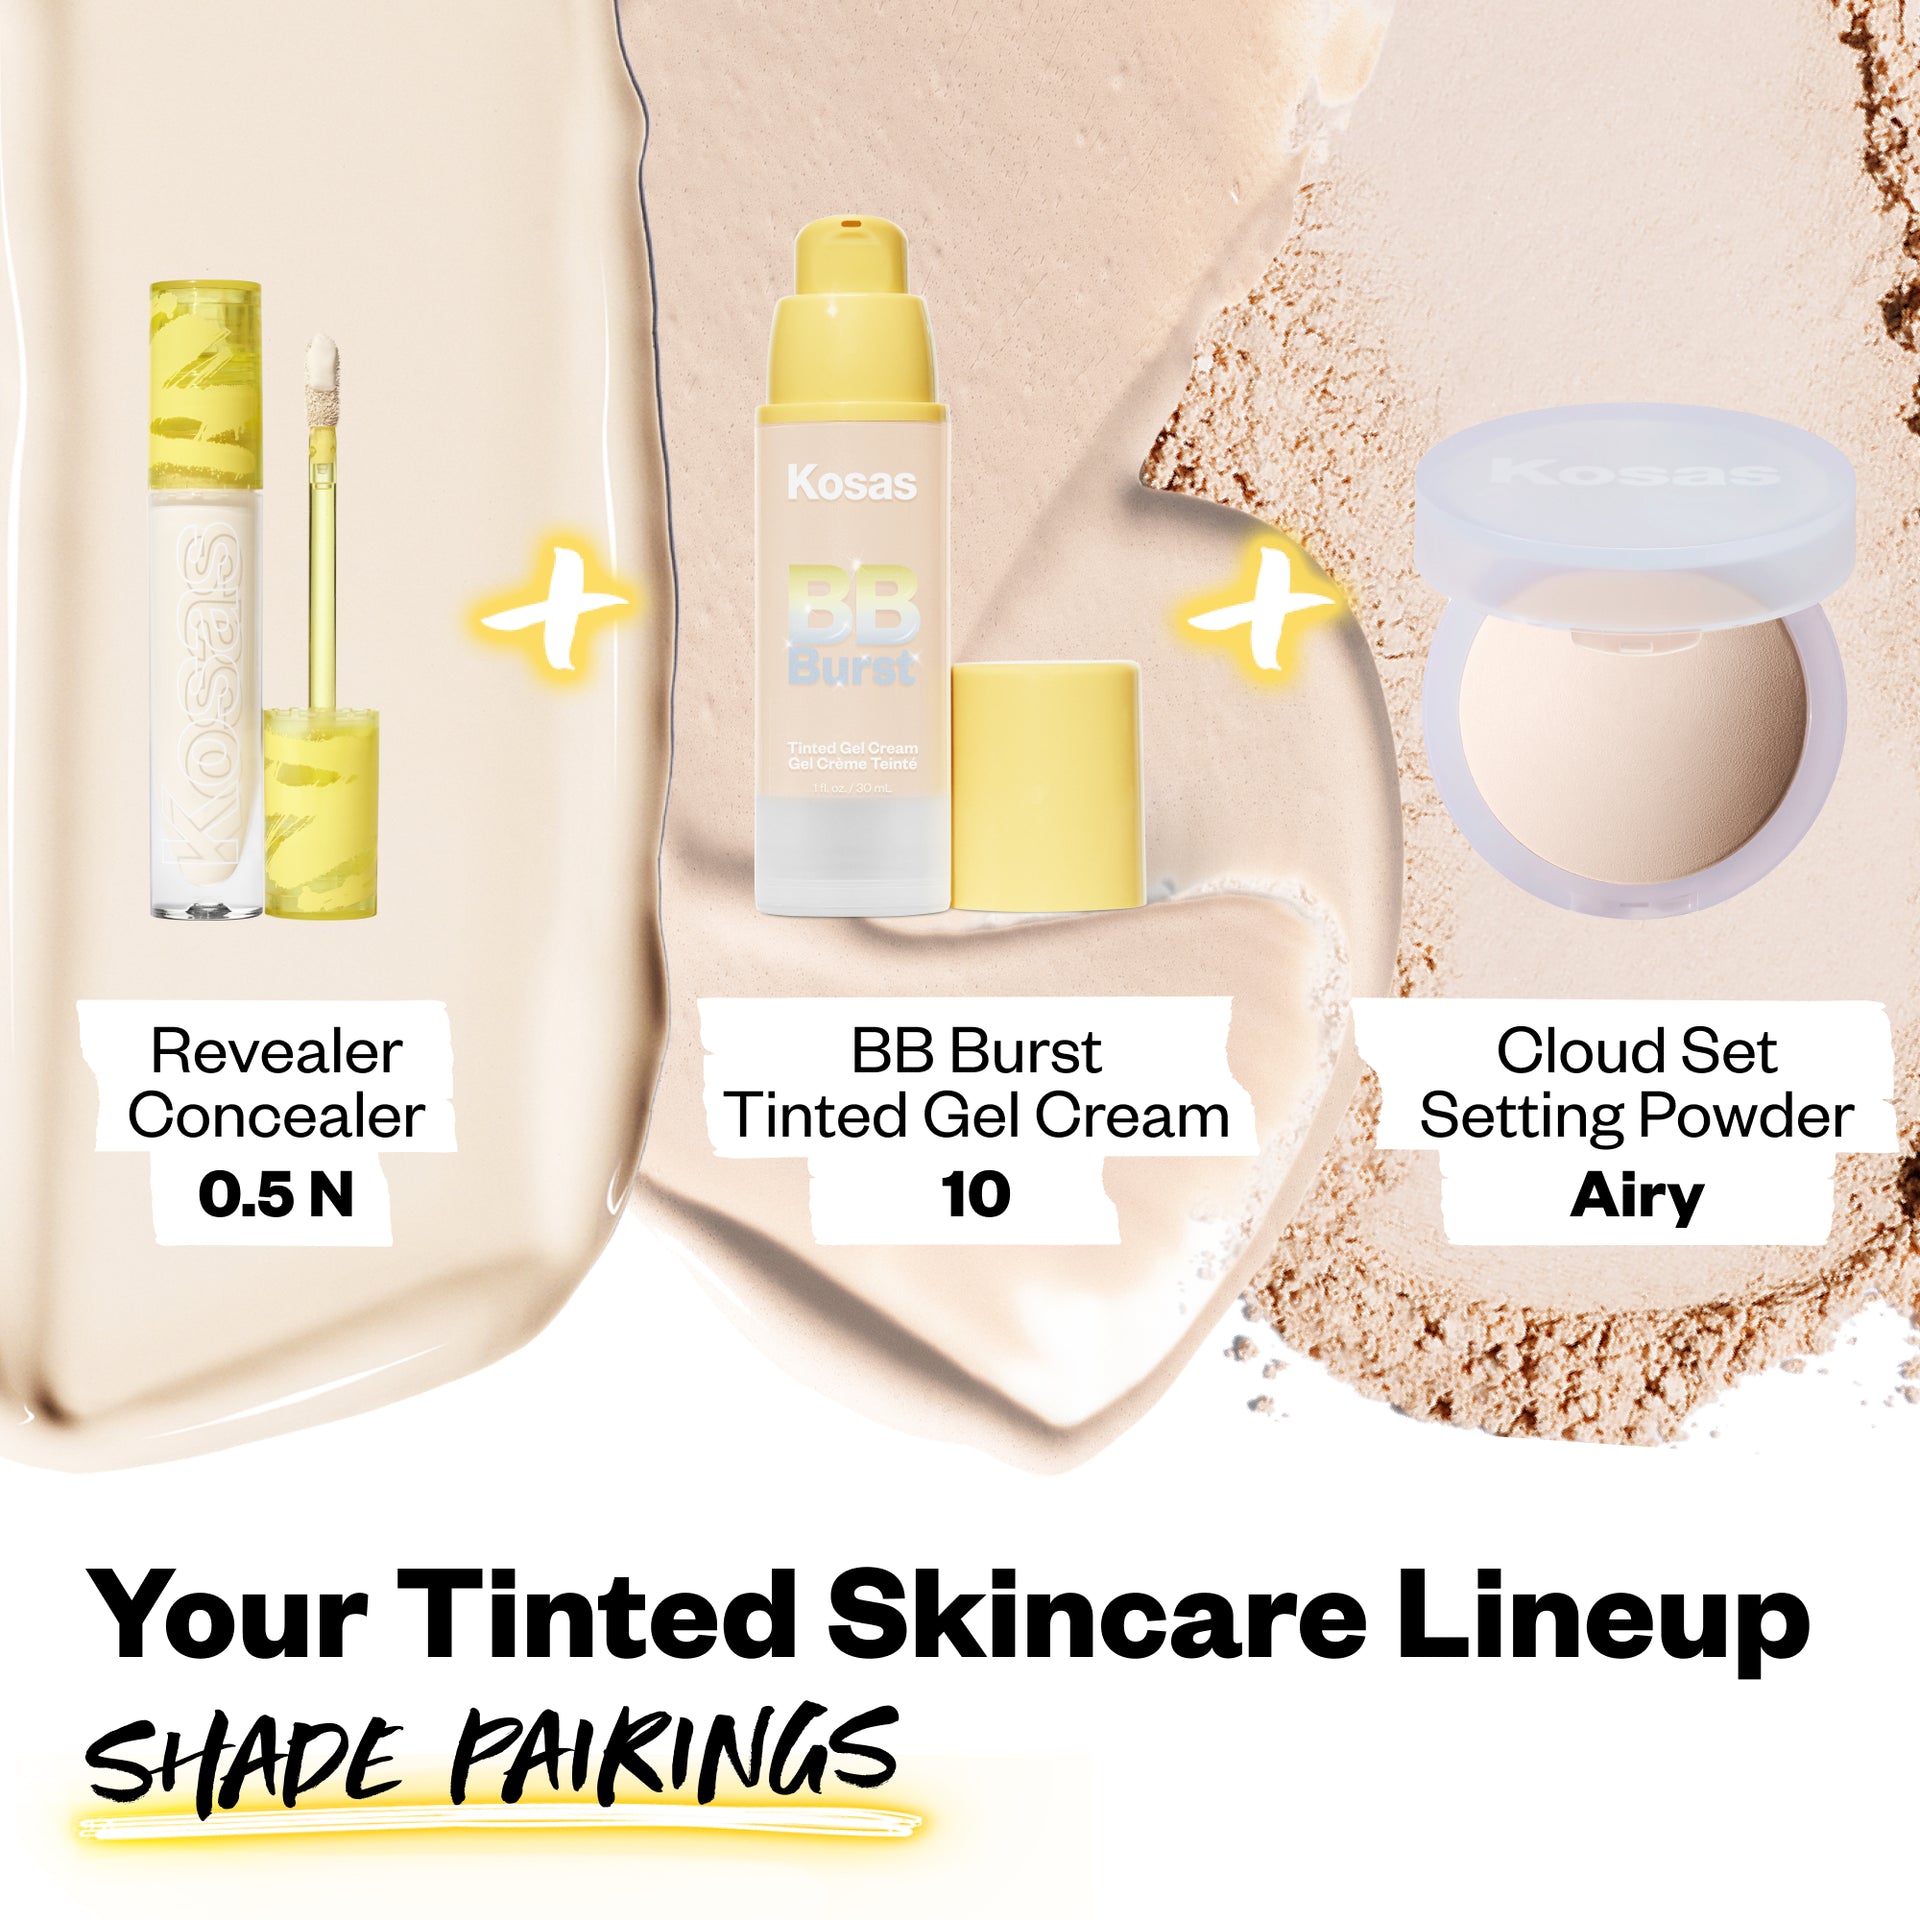 Your Tinted Skincare Lineup Shade Pairings (Revealer Concealer 0.5N, BB Burst Tinted Gel Cream 10, Cloud Set Setting Powder Airy)